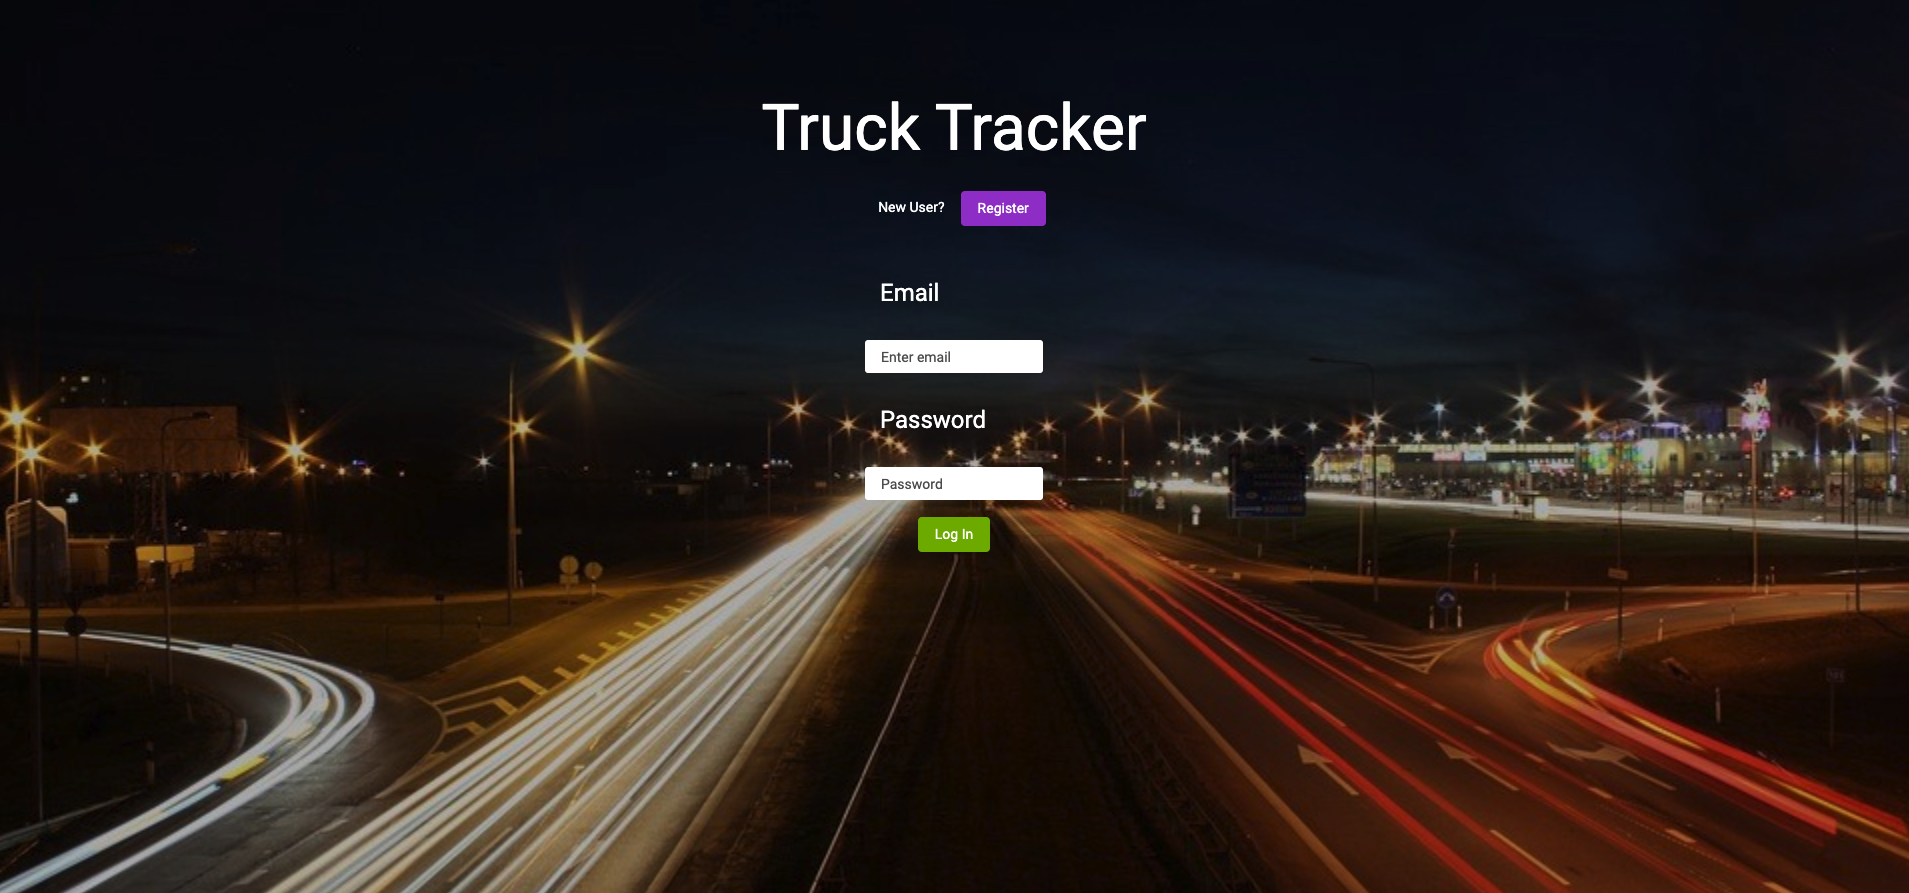 Truck Tracker app image